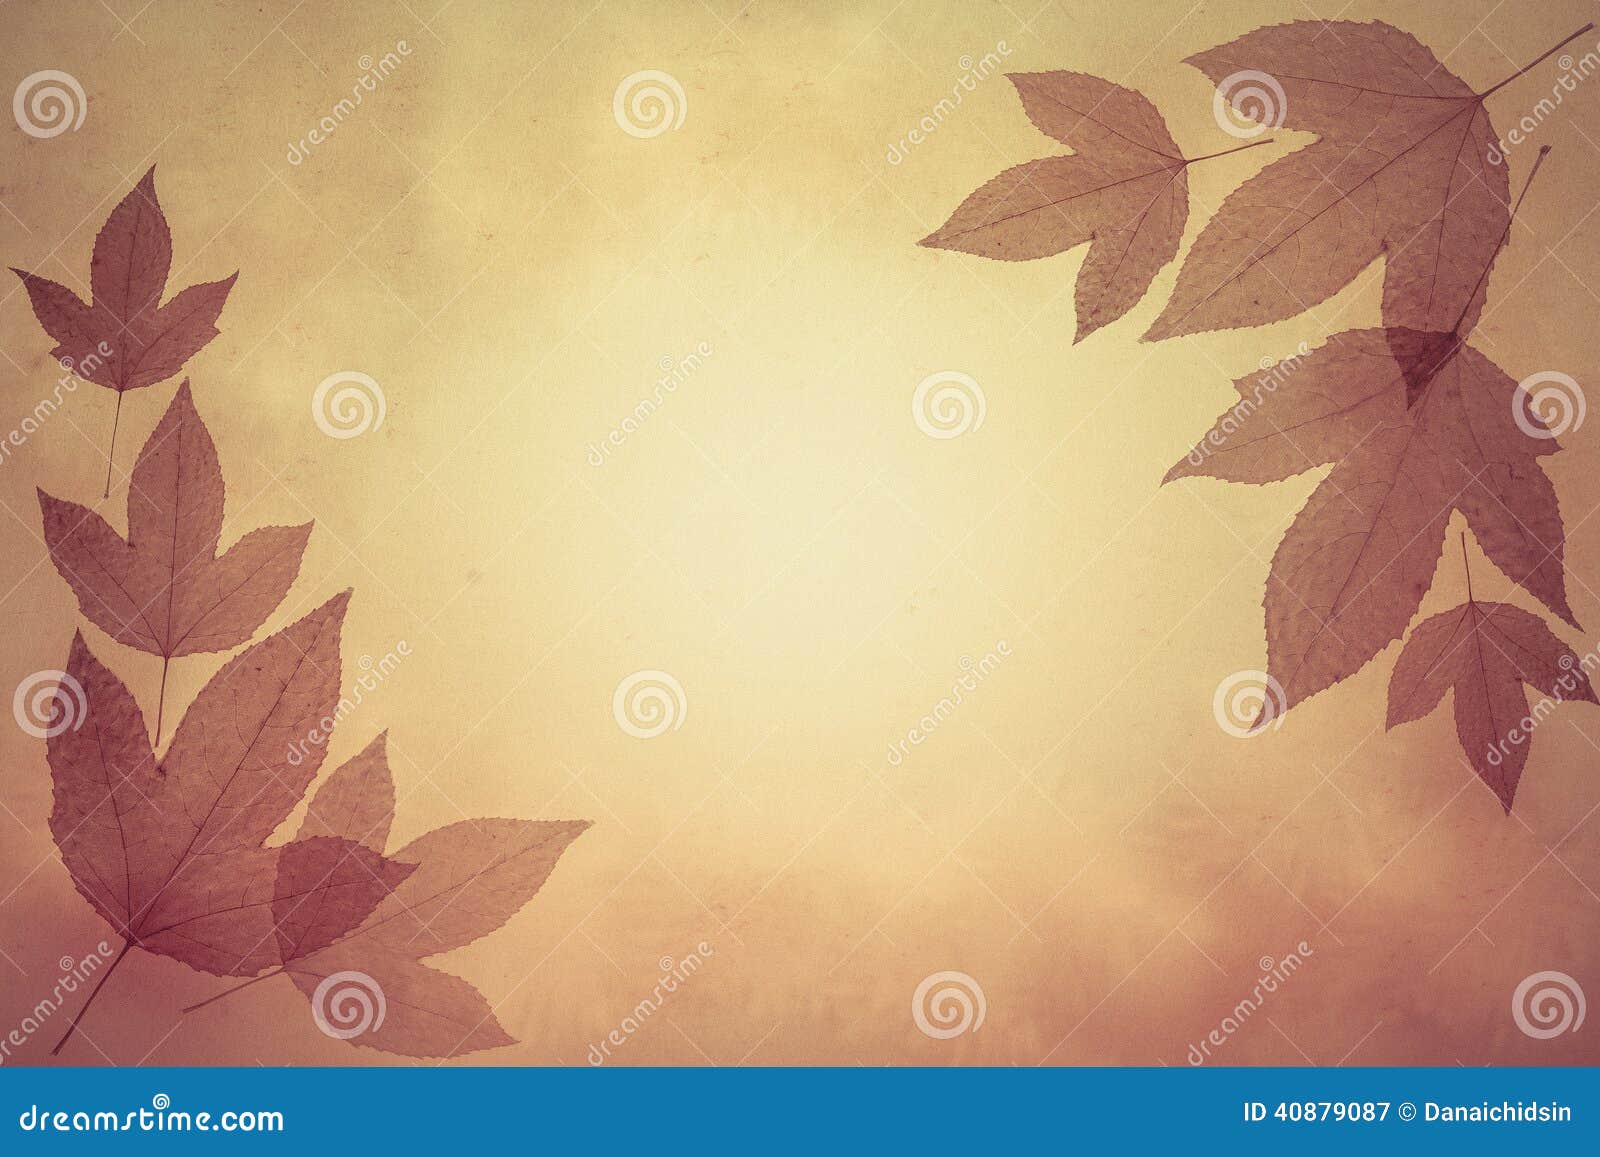 Brown Grunge Leaf Background Stock Image - Image of horizontal, wall